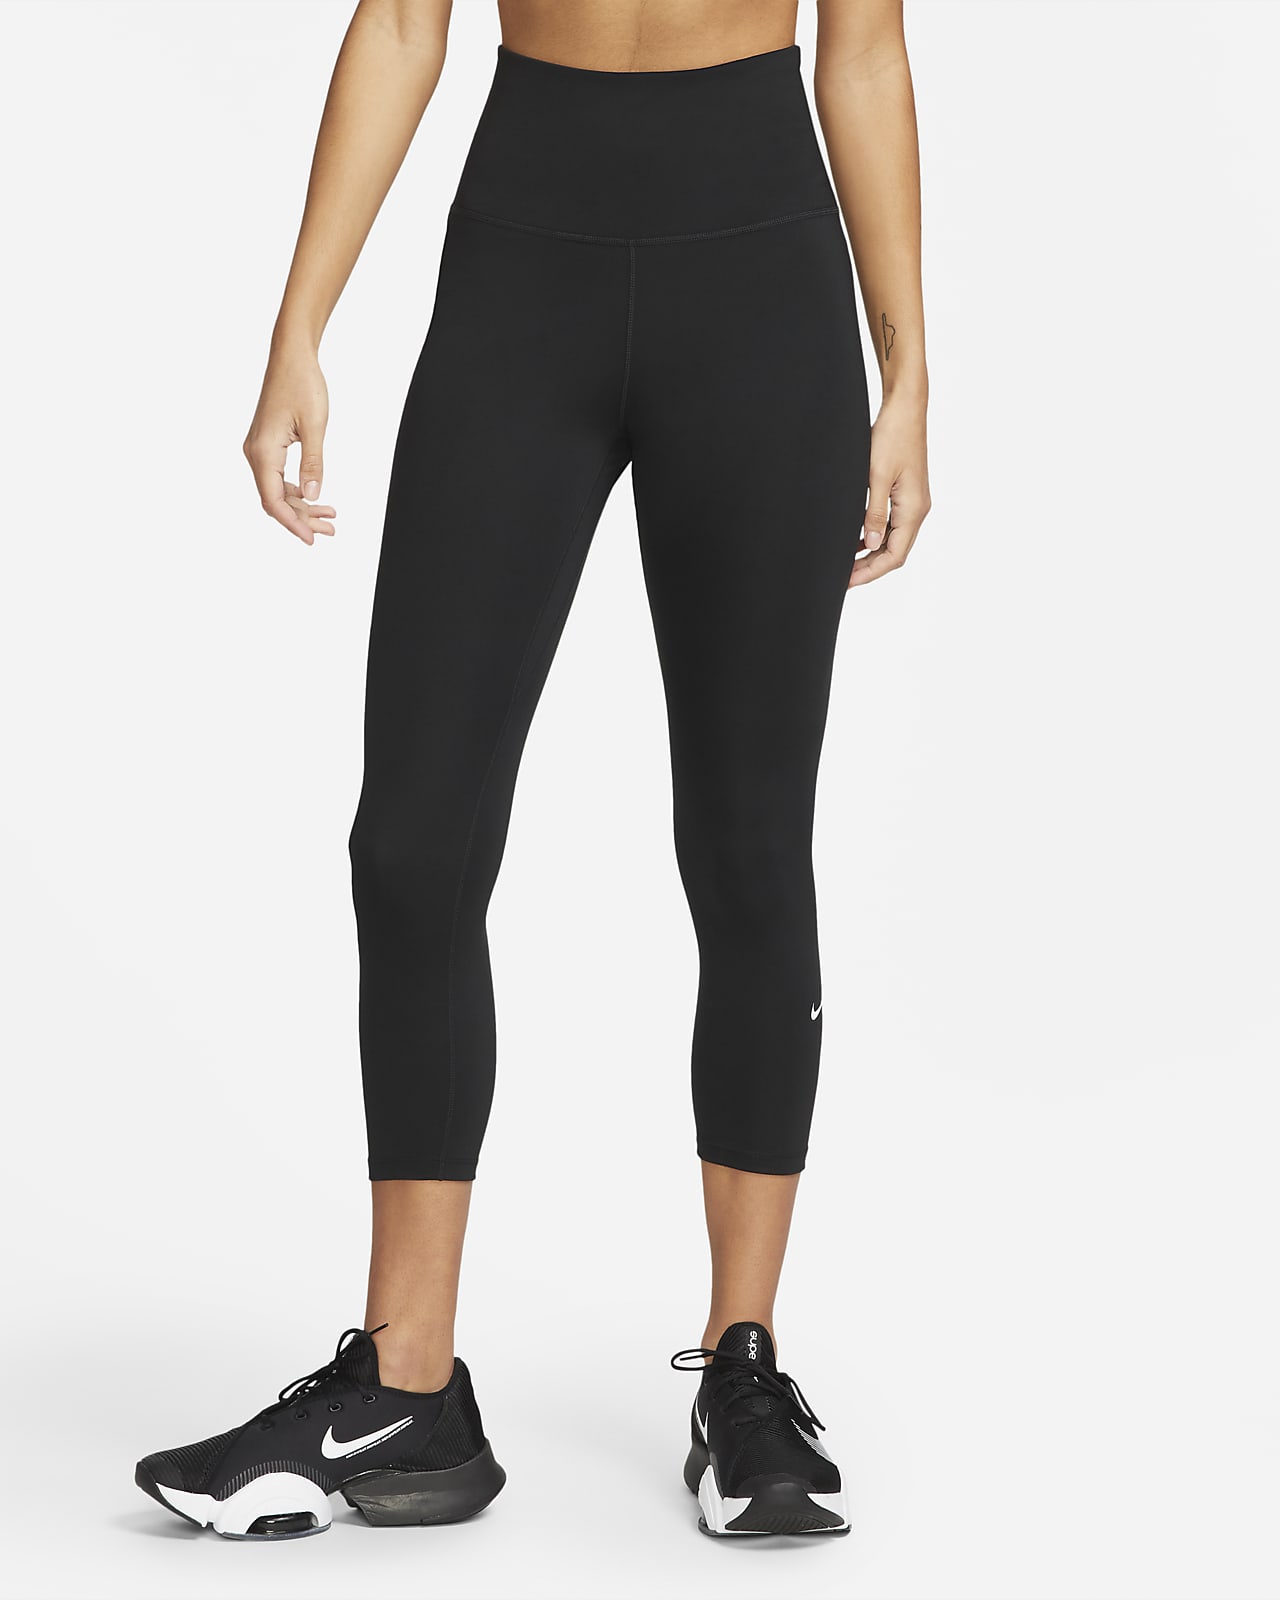 Legging taille haute femme Nike One Dri-FIT - Nike - Femme - Entretien  physique